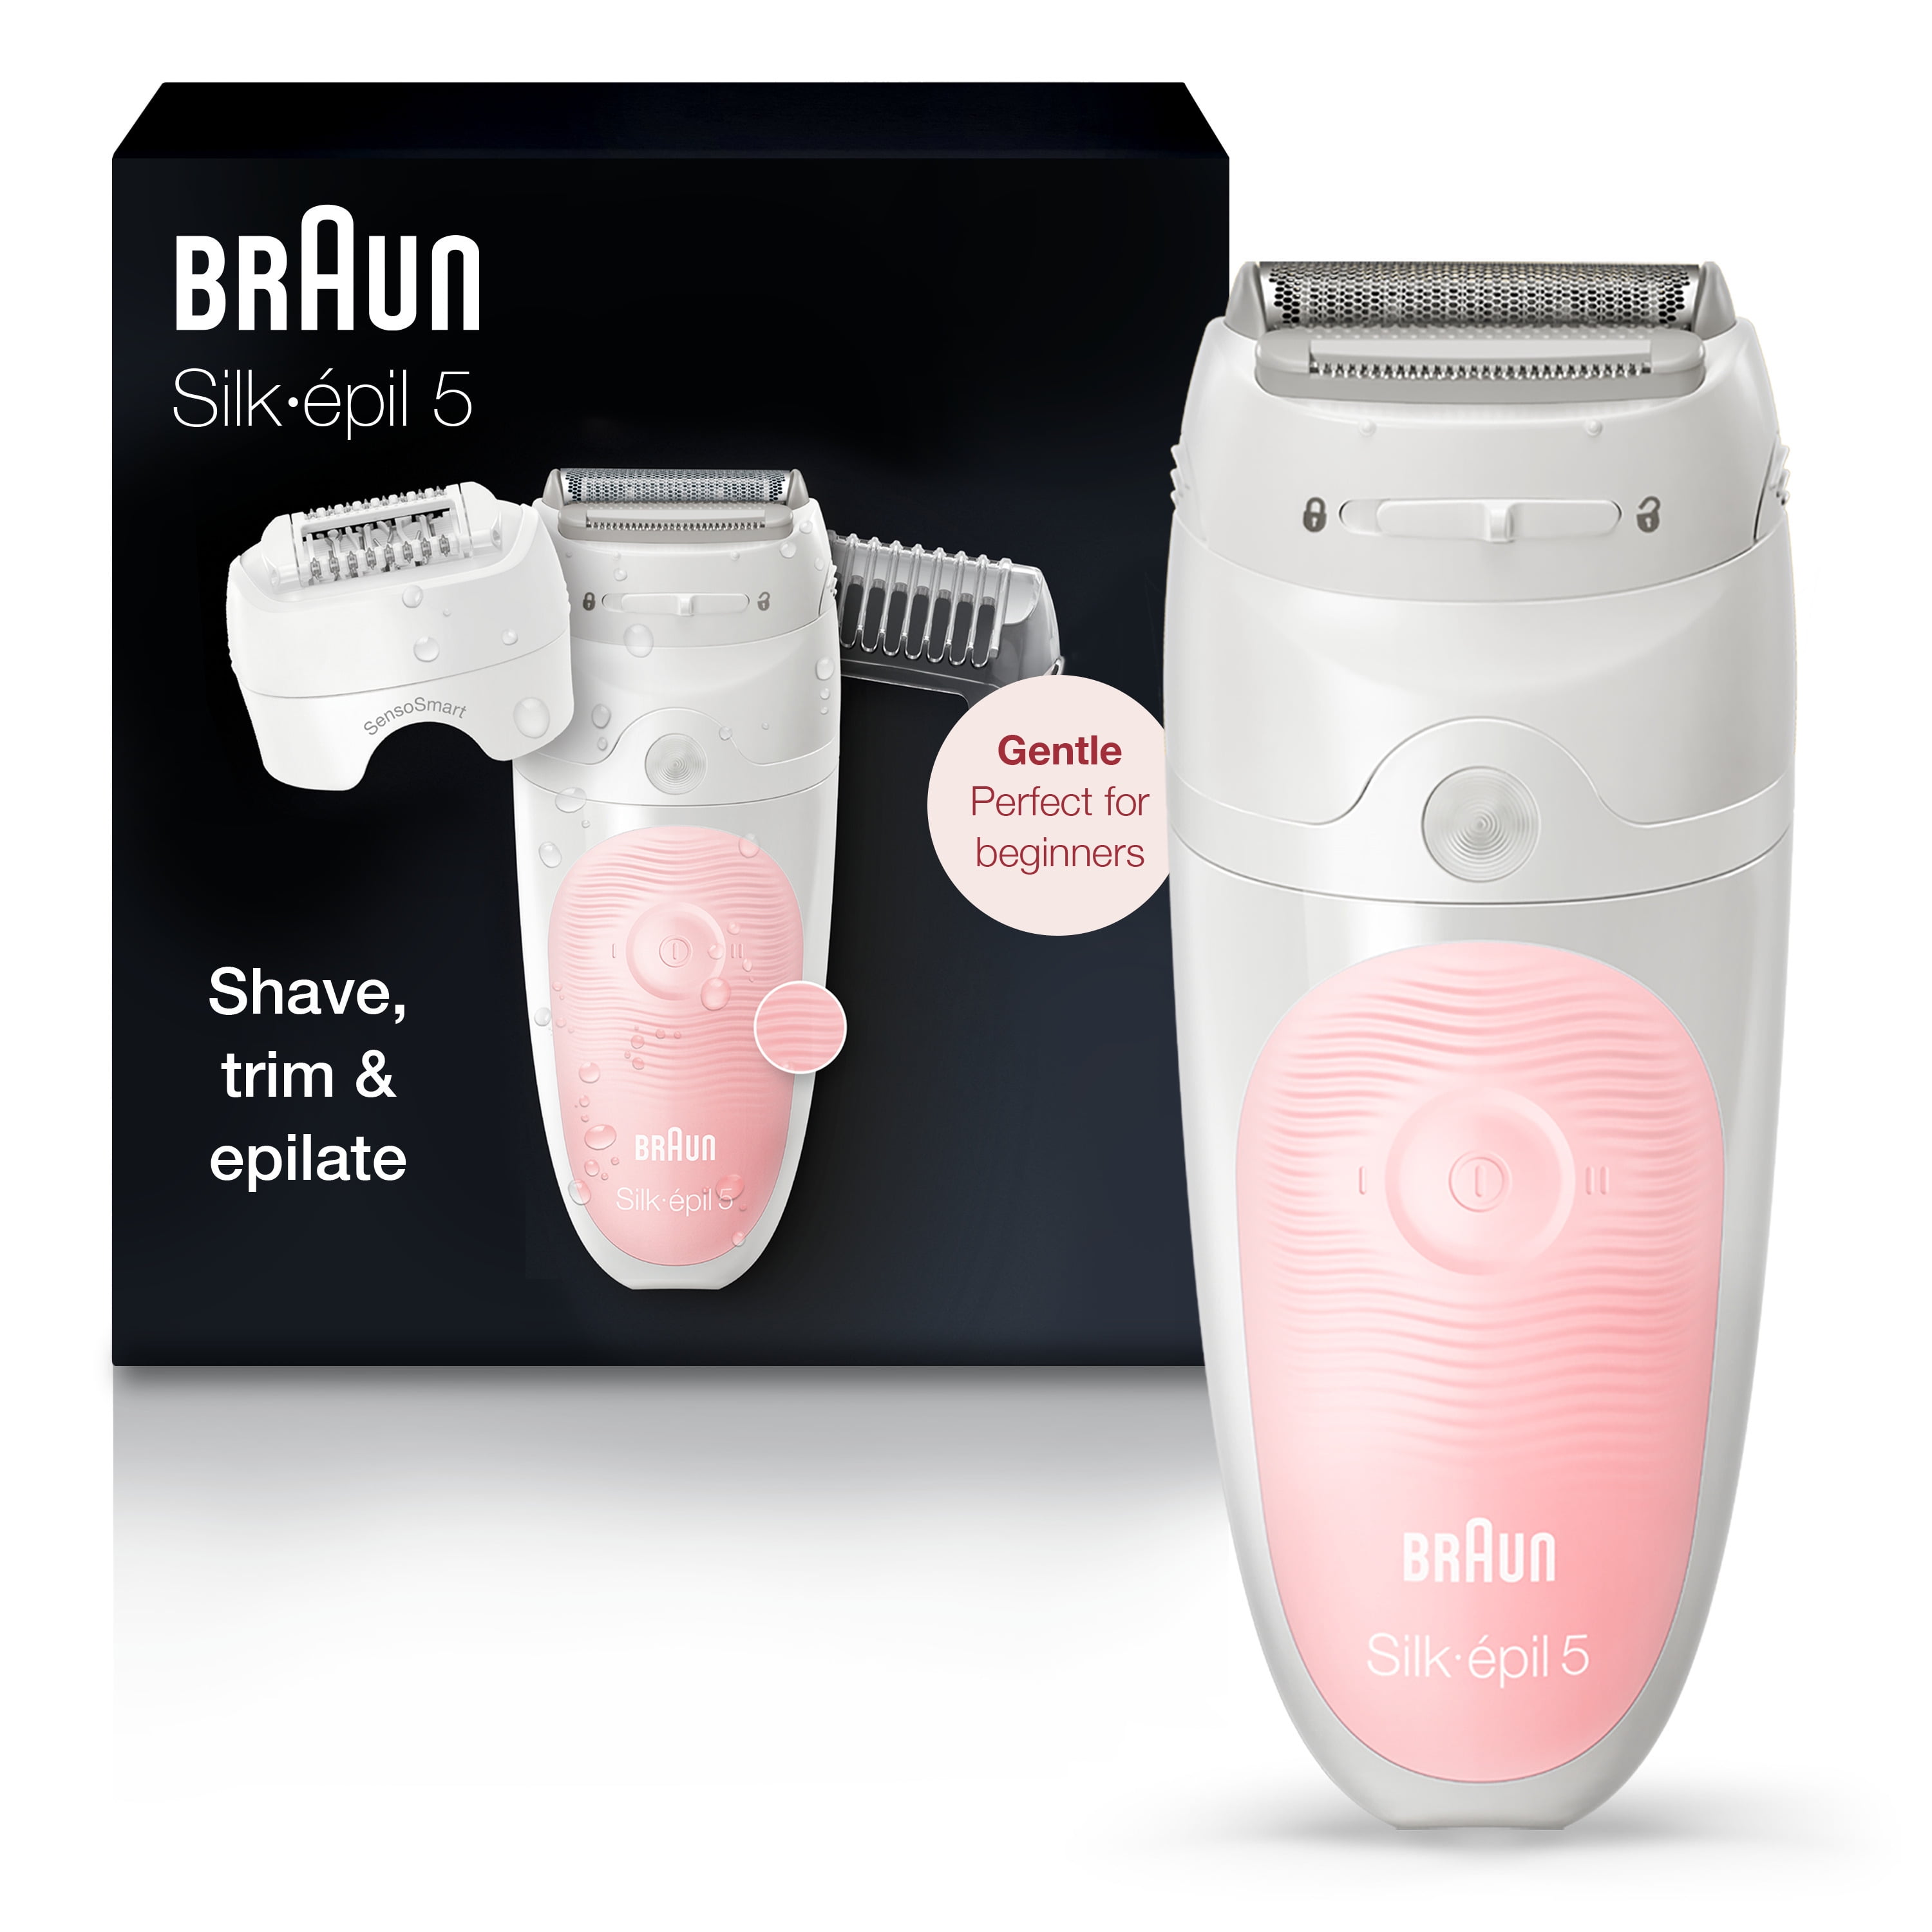 Braun PL5054 Silk-Expert Pro 5 Pulsed light epilator - white/gold